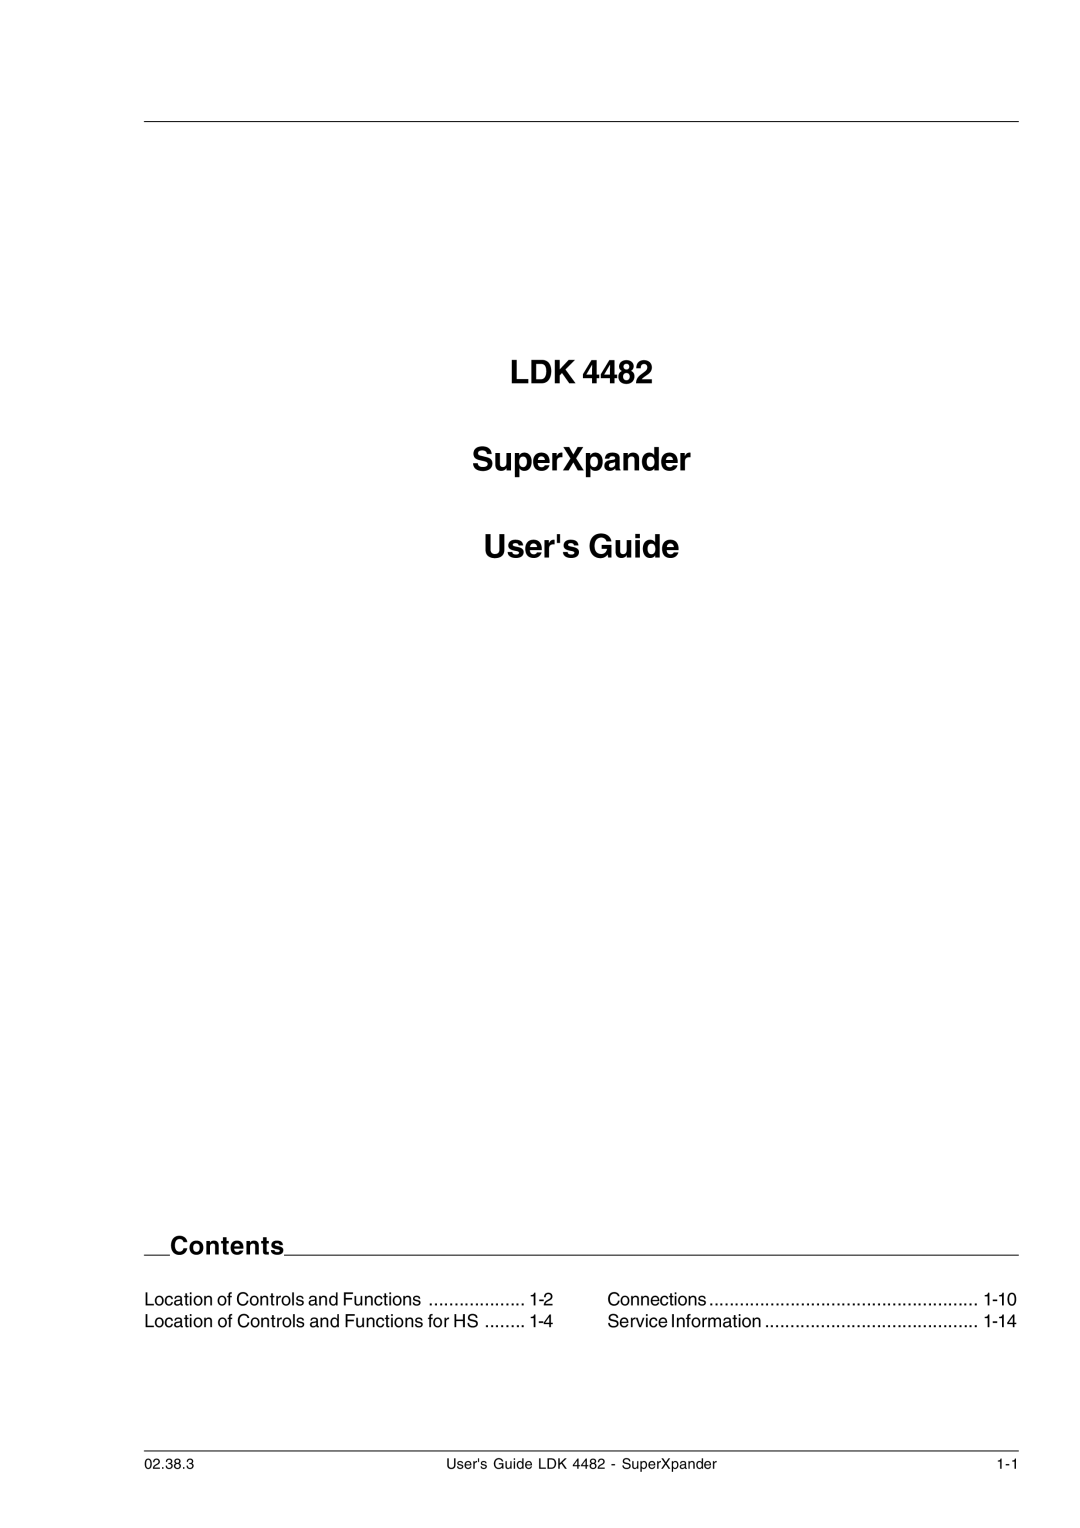 Technicolor - Thomson LDK 4482 manual LDK SuperXpander Users Guide, Contents 